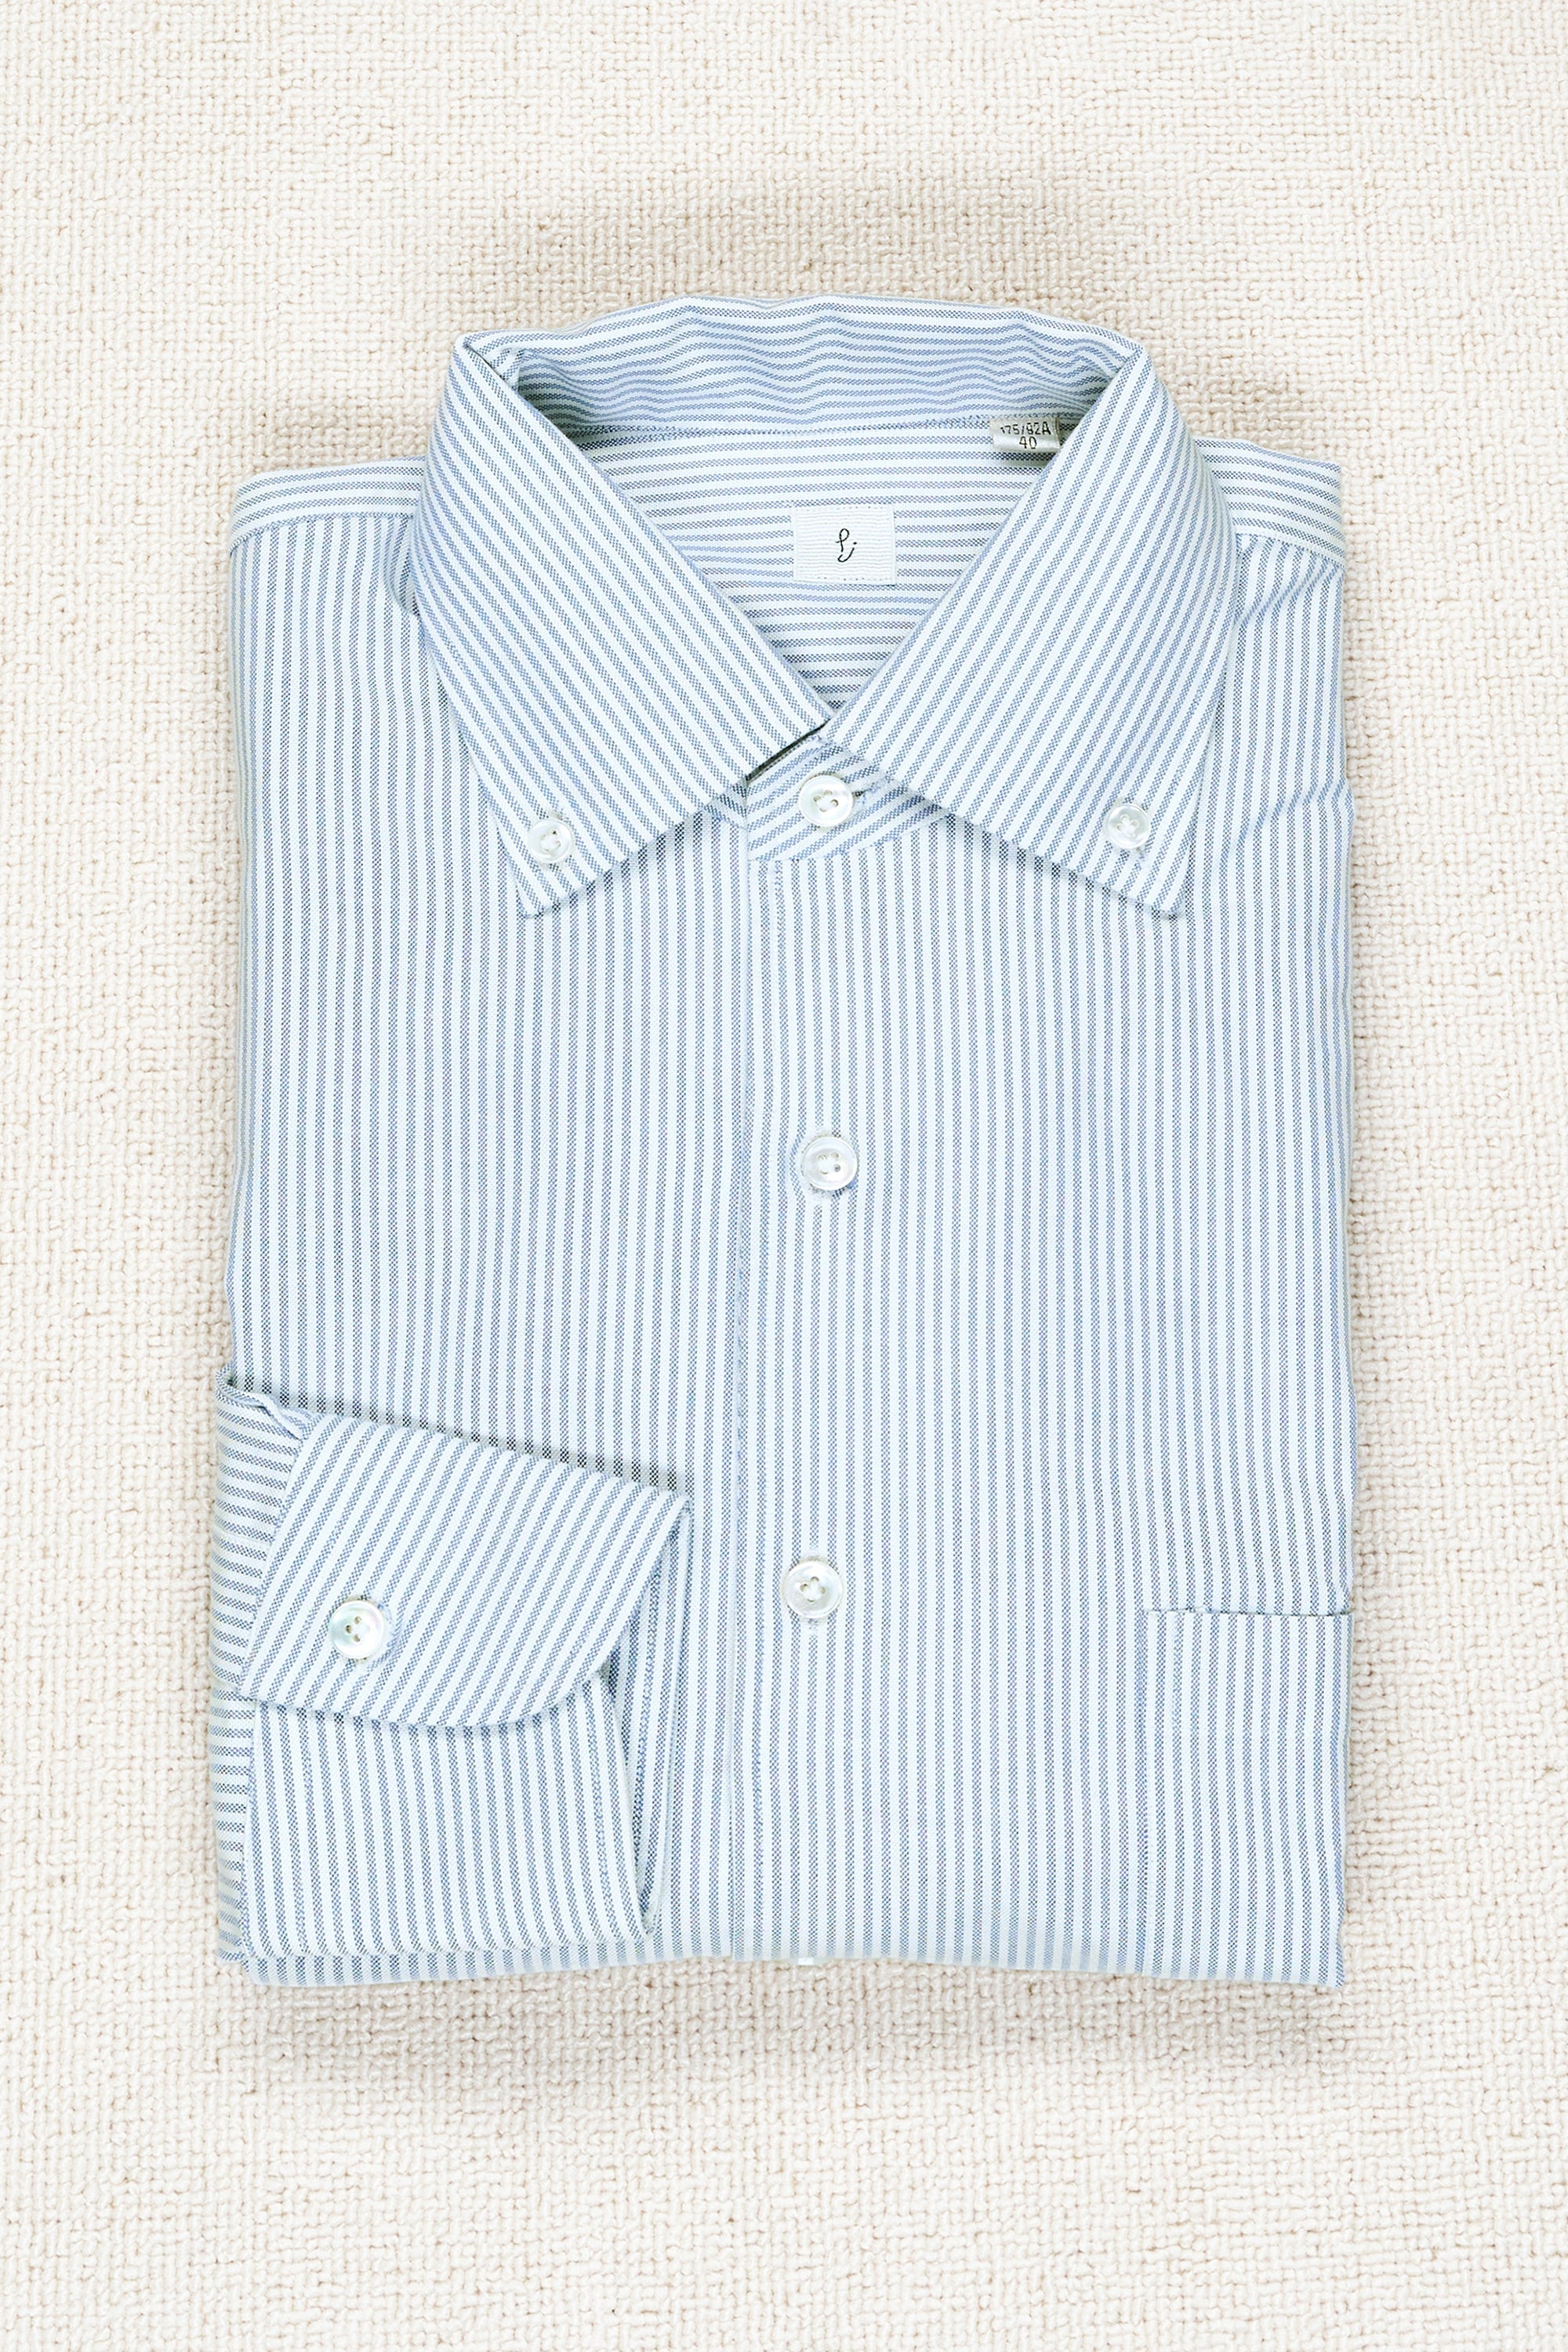 P. Johnson Navy/White Stripe Cotton Button Down Shirt